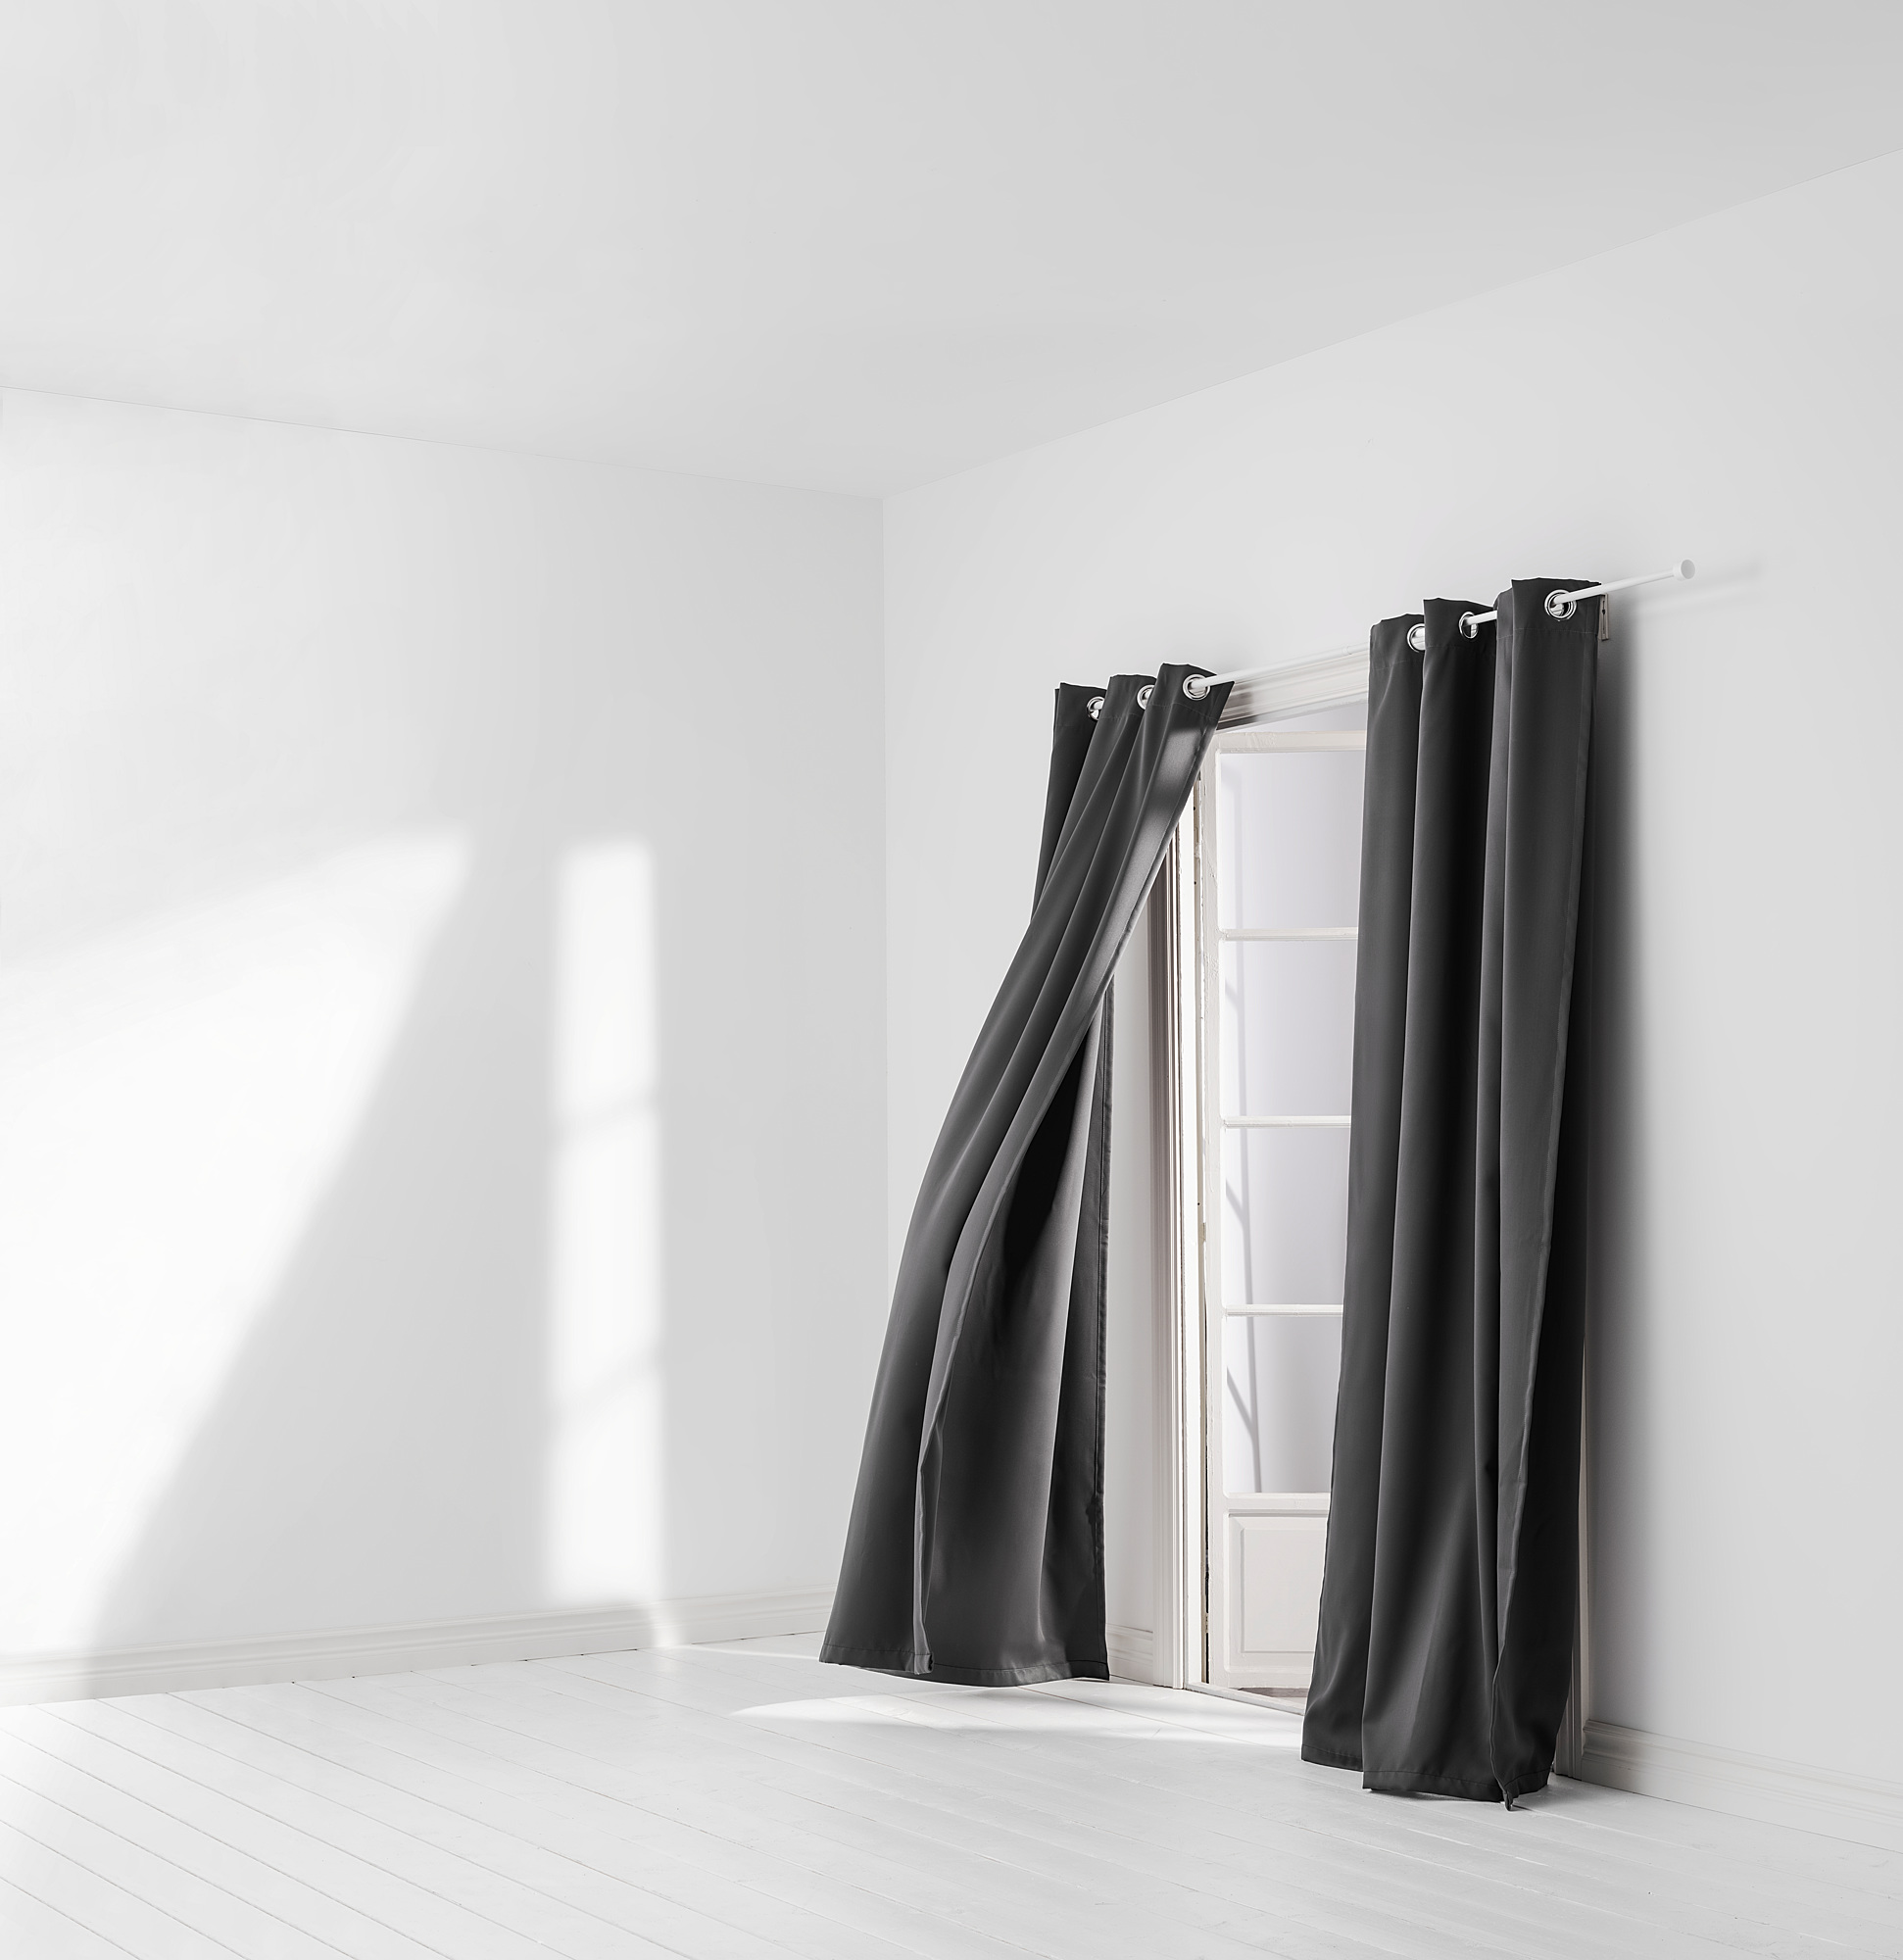 HILLEBORG block-out curtains, 1 pair